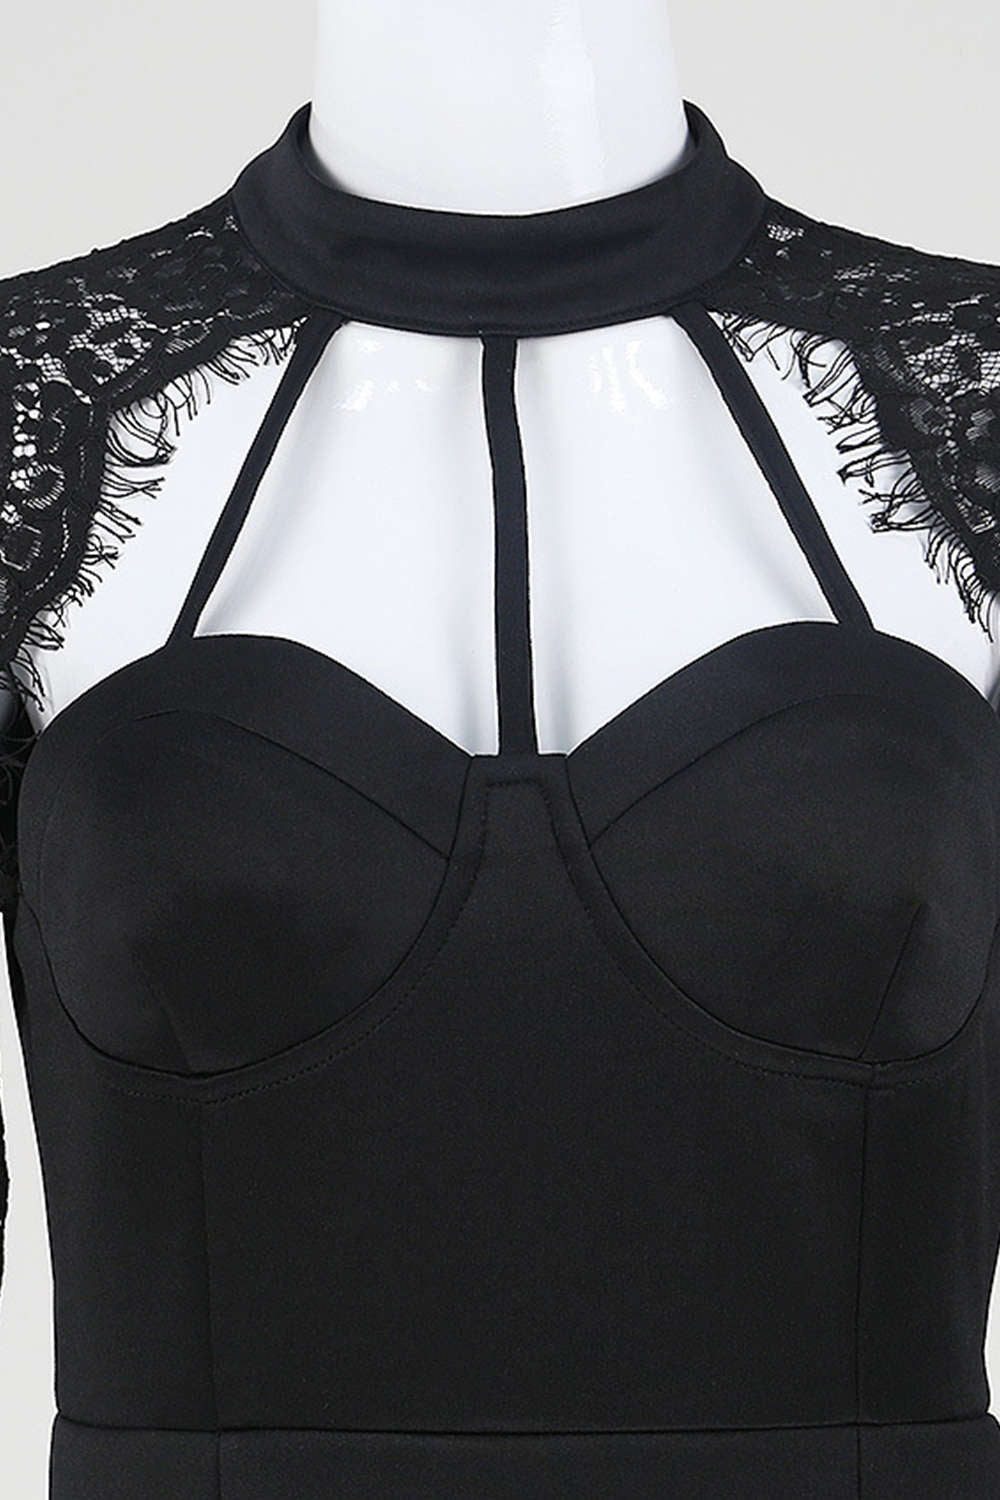 Iyasson Black Lace Splicing Body-Con Dress